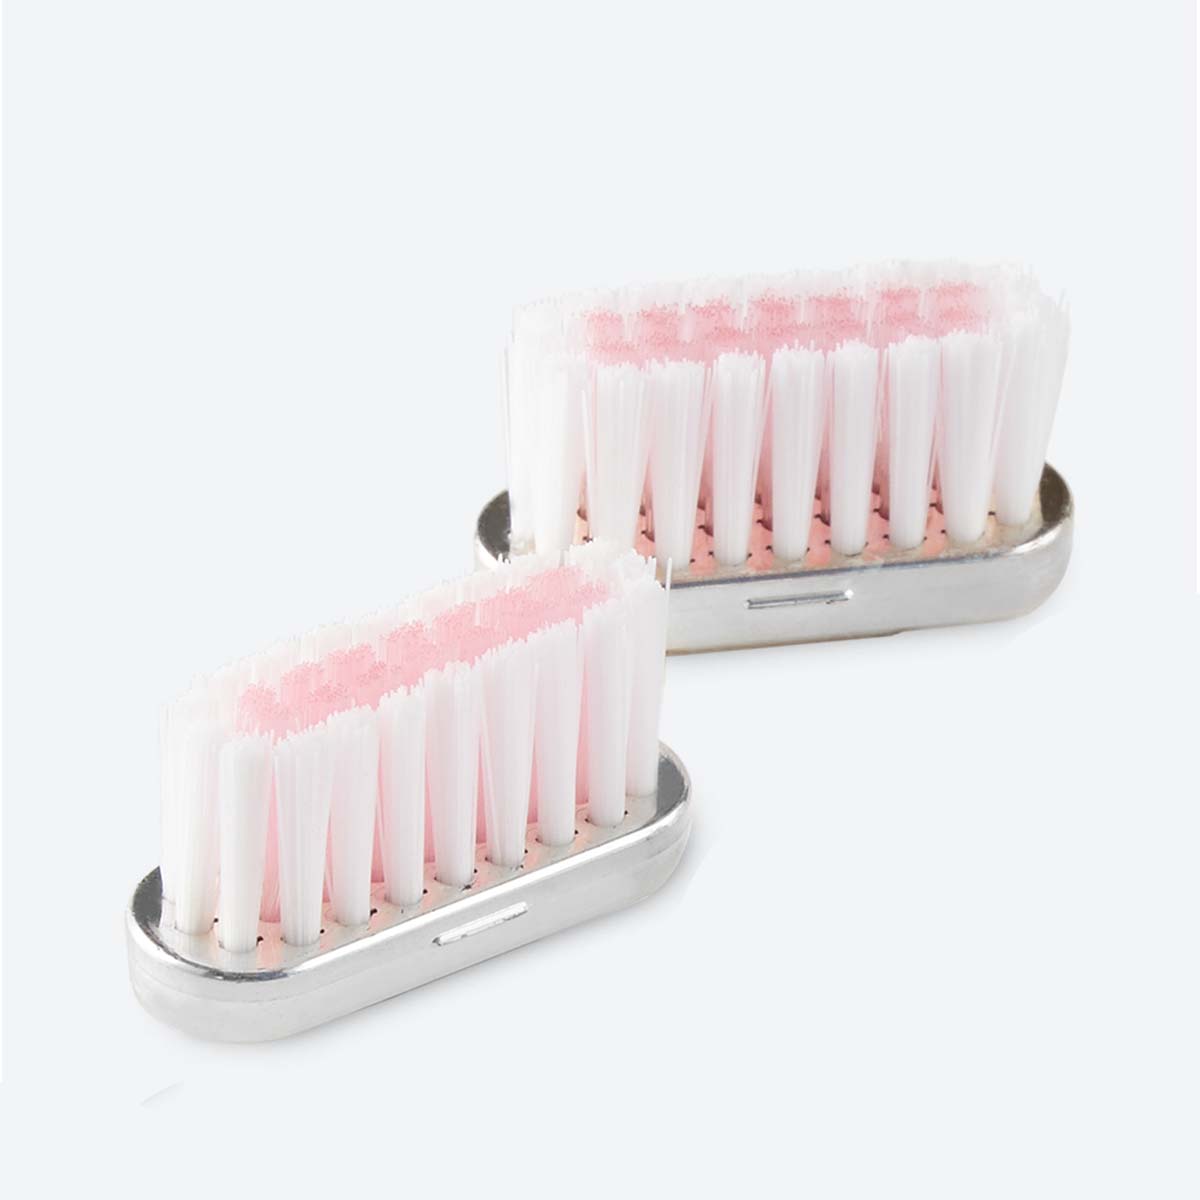 Norwex Toothbrush, Refill